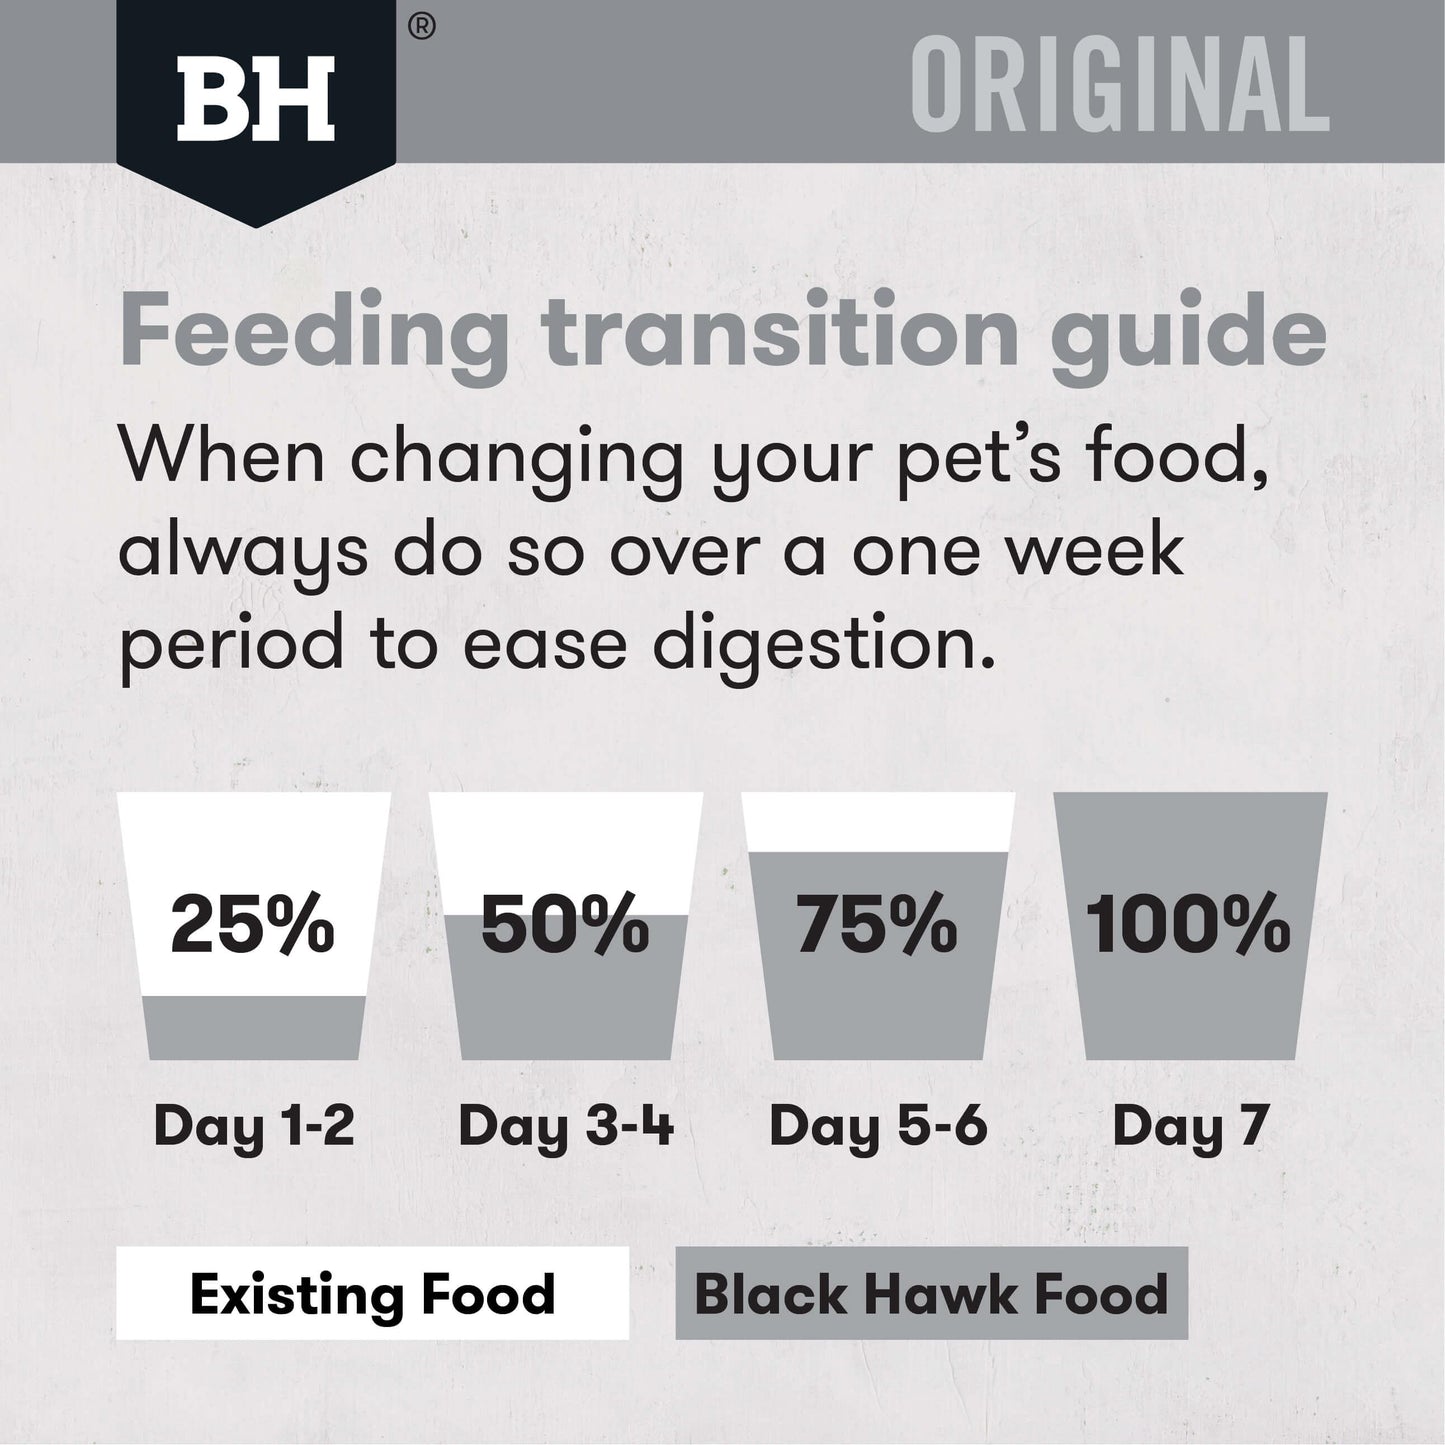 Black Hawk Original Adult Fish Dry Cat Food